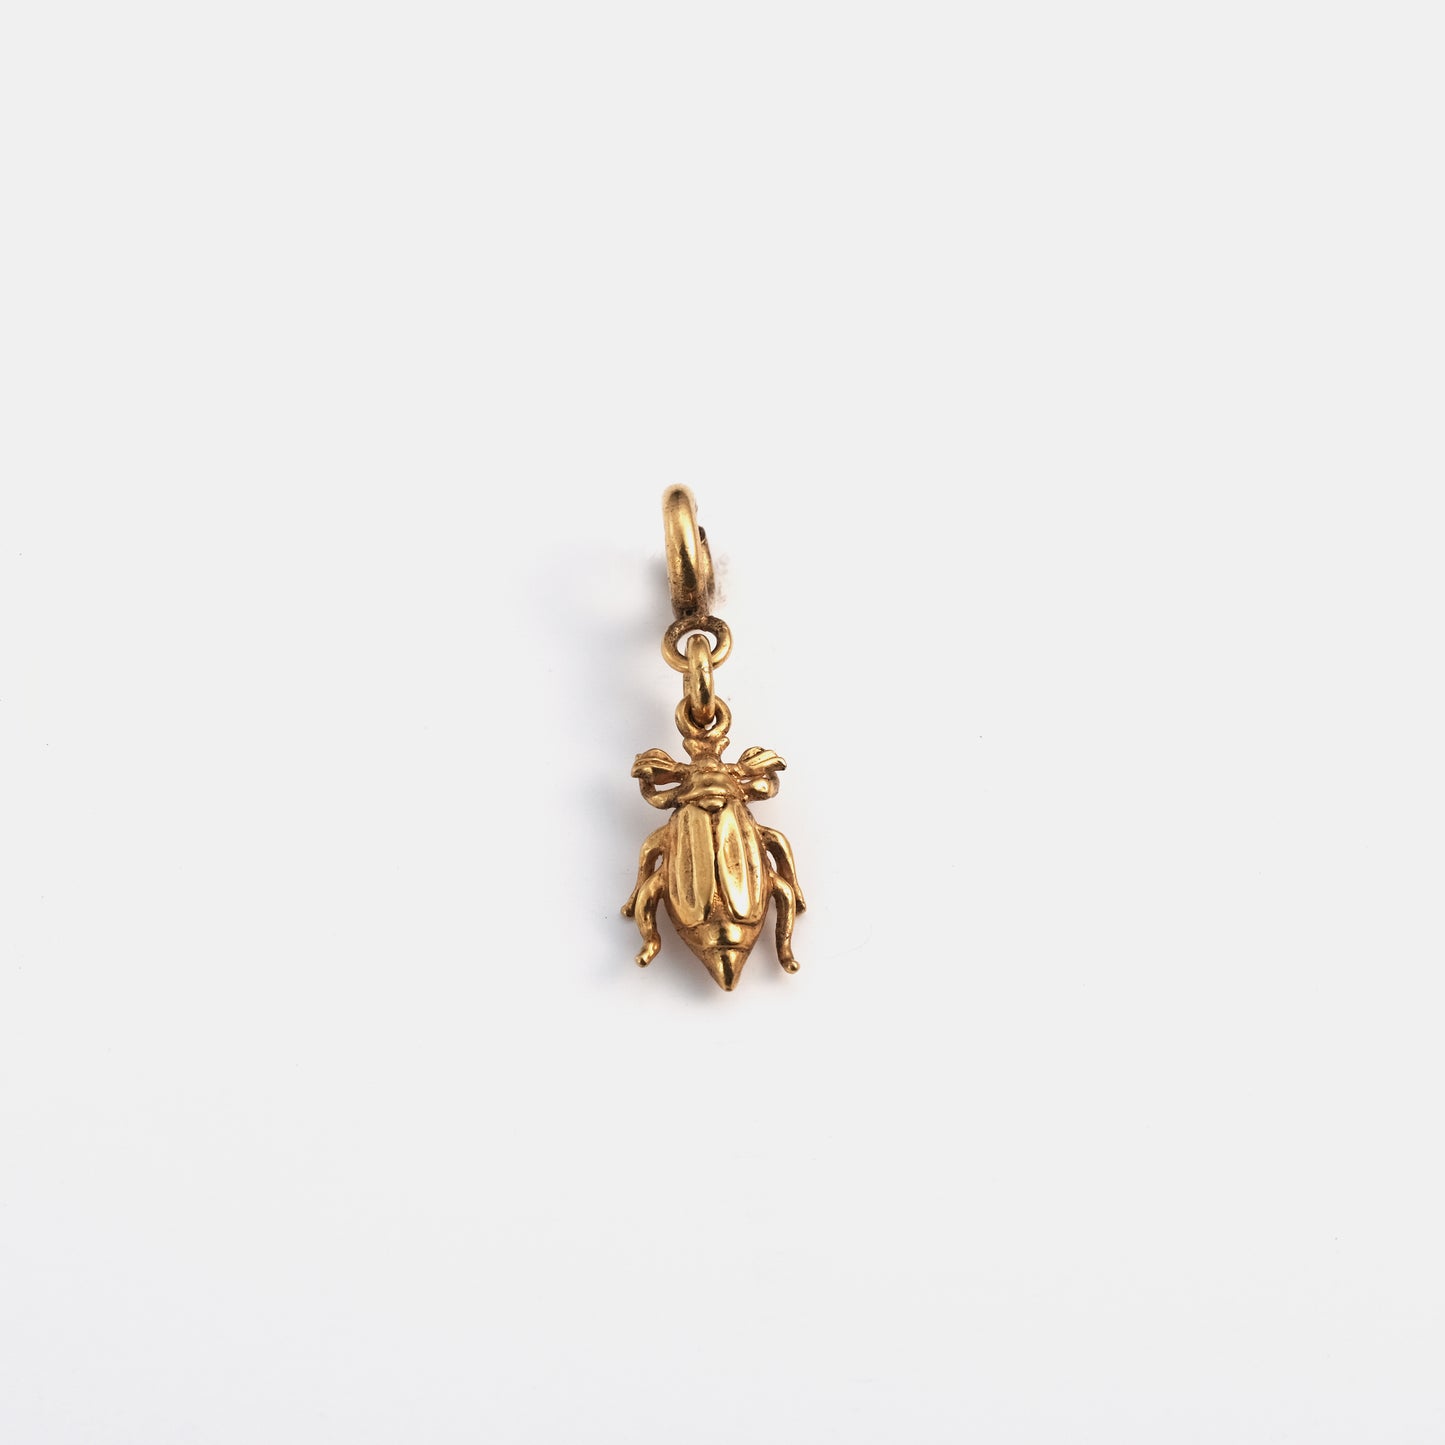 Firefly pendant